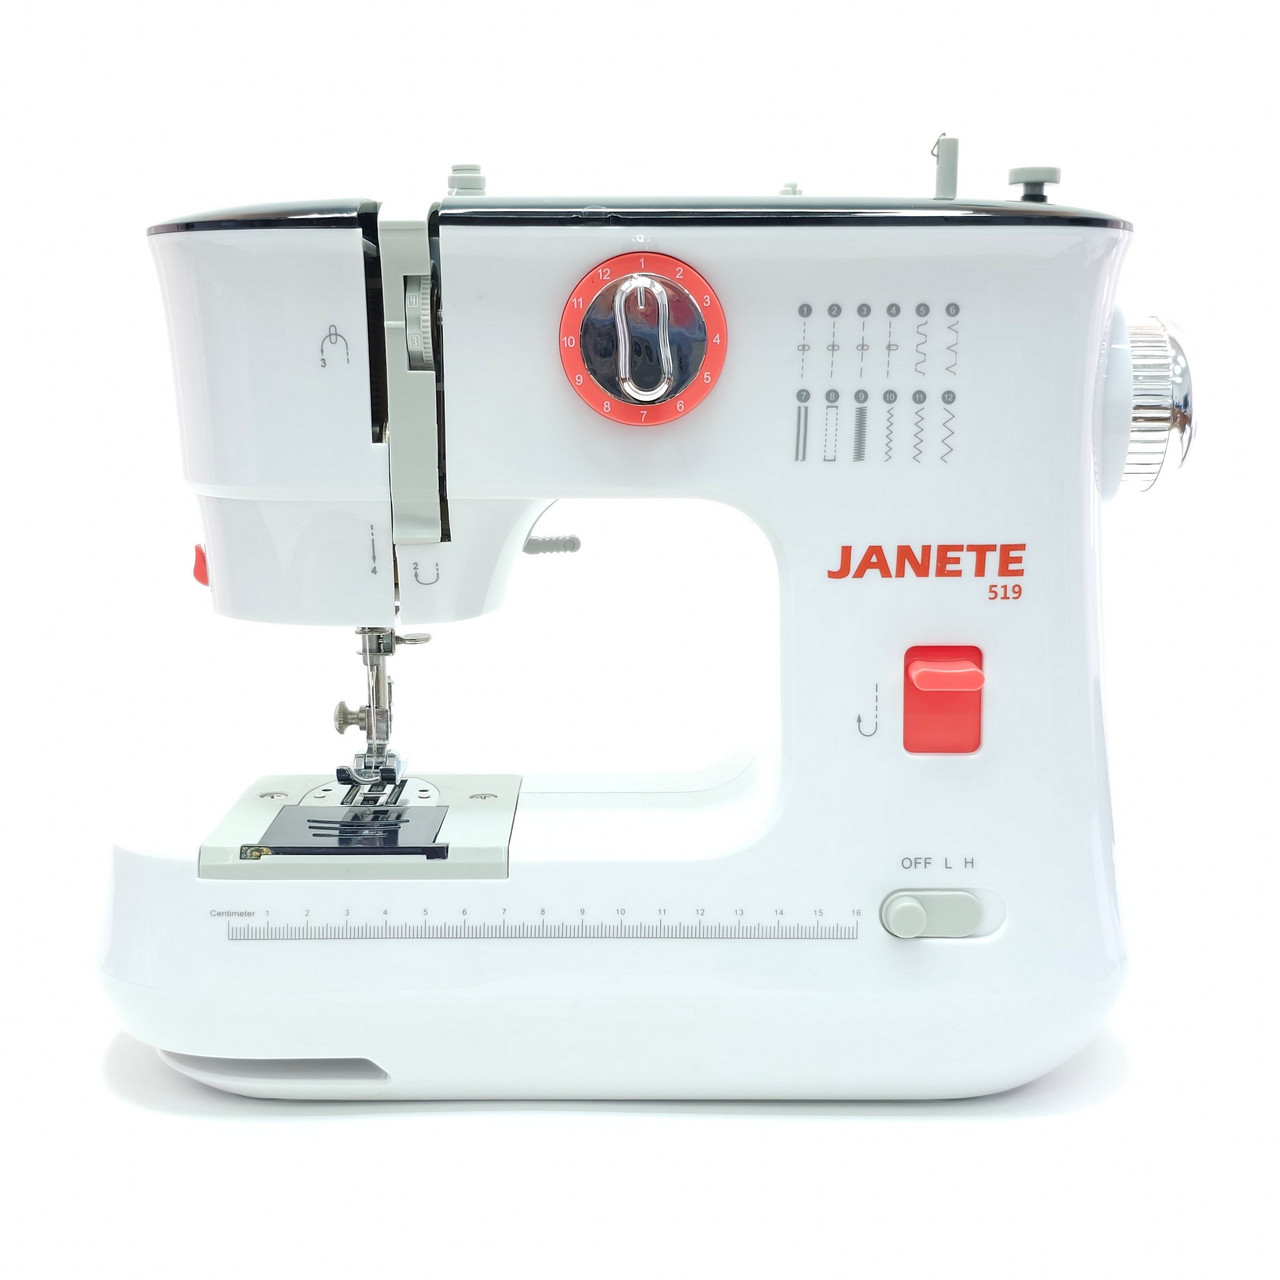 Бытовая швейная машина JANETE 519